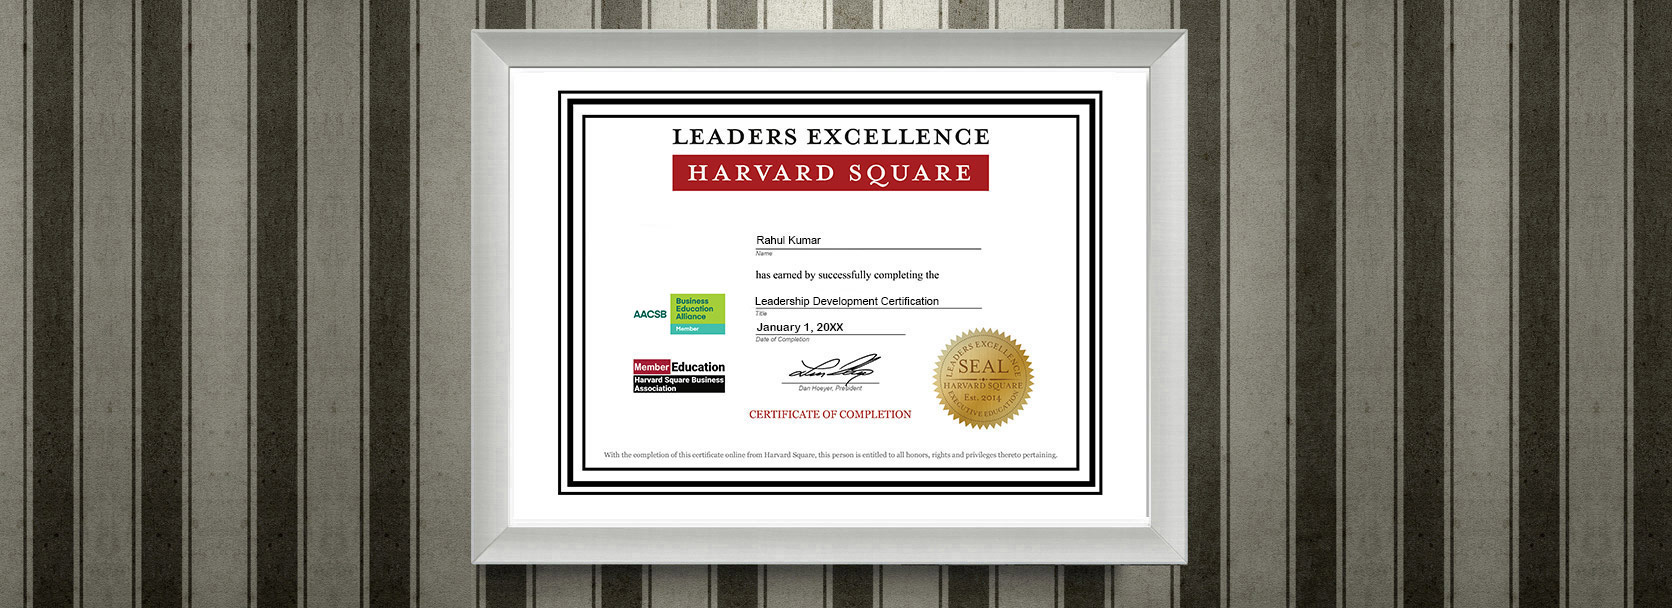 Leadership Development Certification